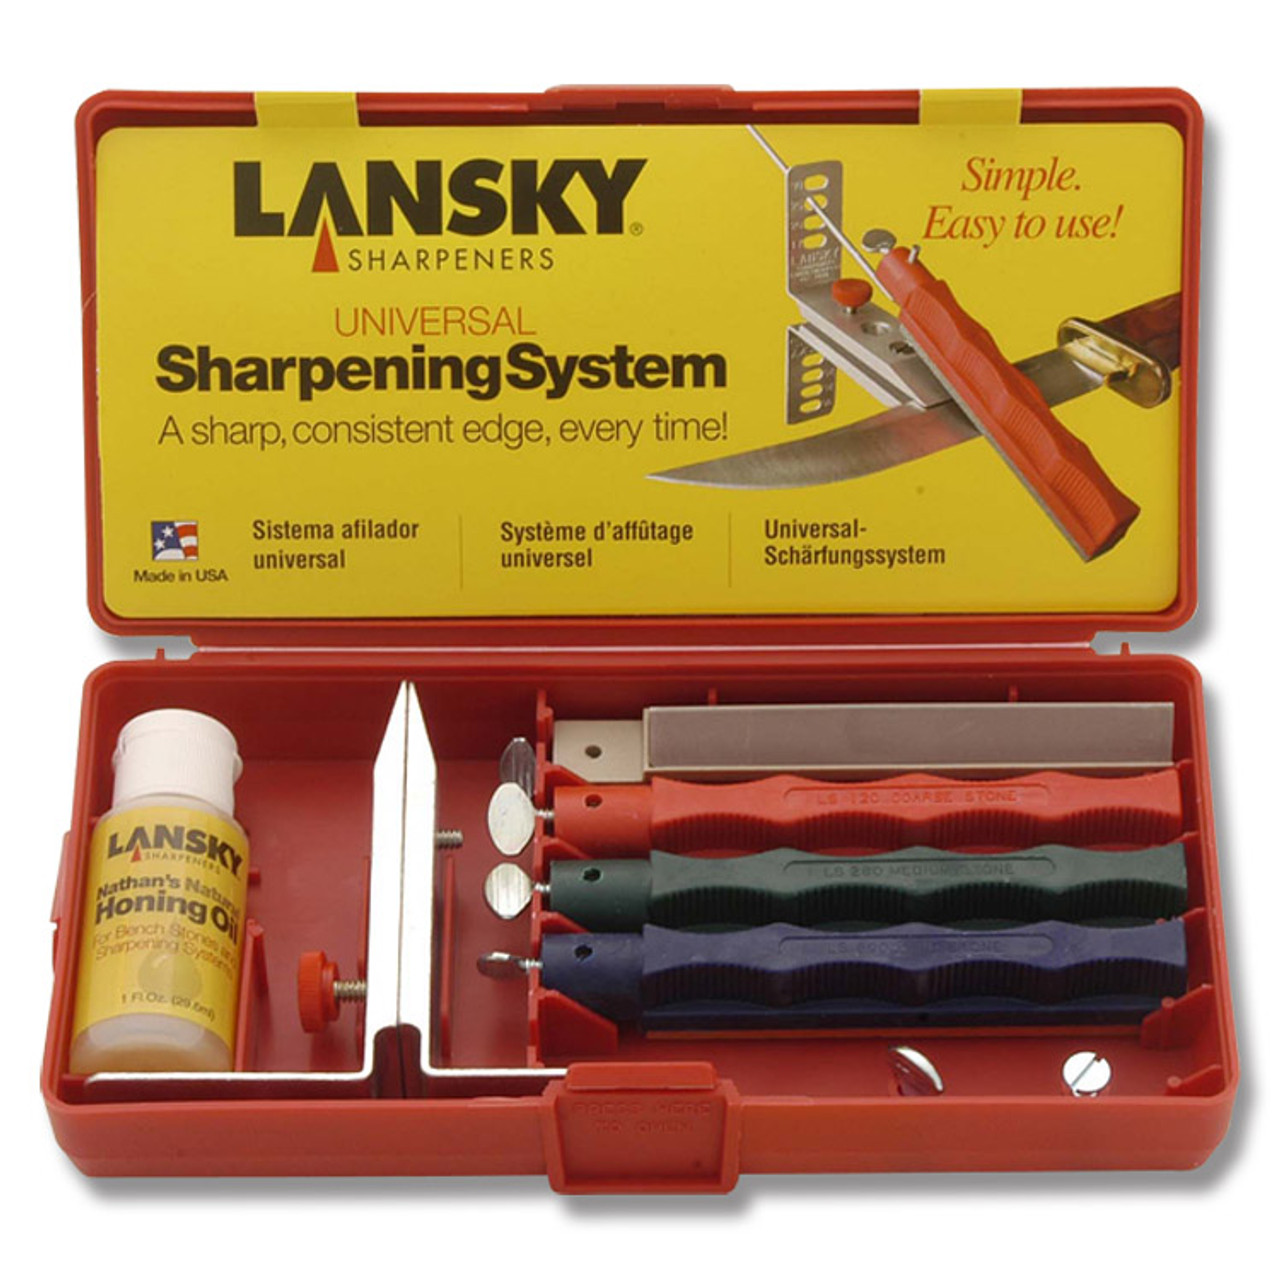 Lansky Standard 3 Stone Knife Sharpening System